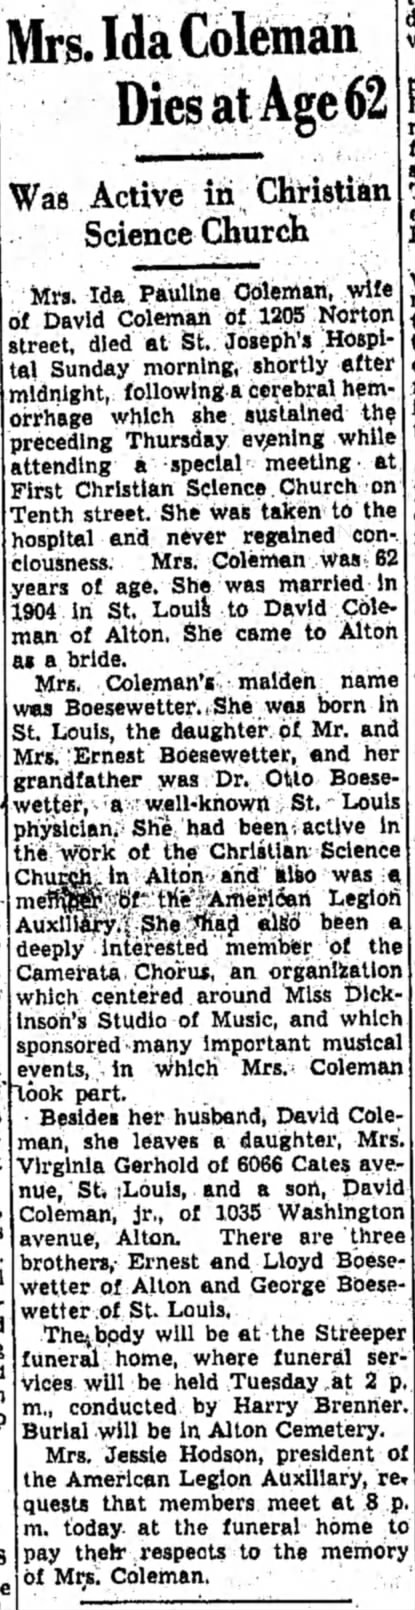 Ida Boesewetter - Coleman dies May 12, 1946